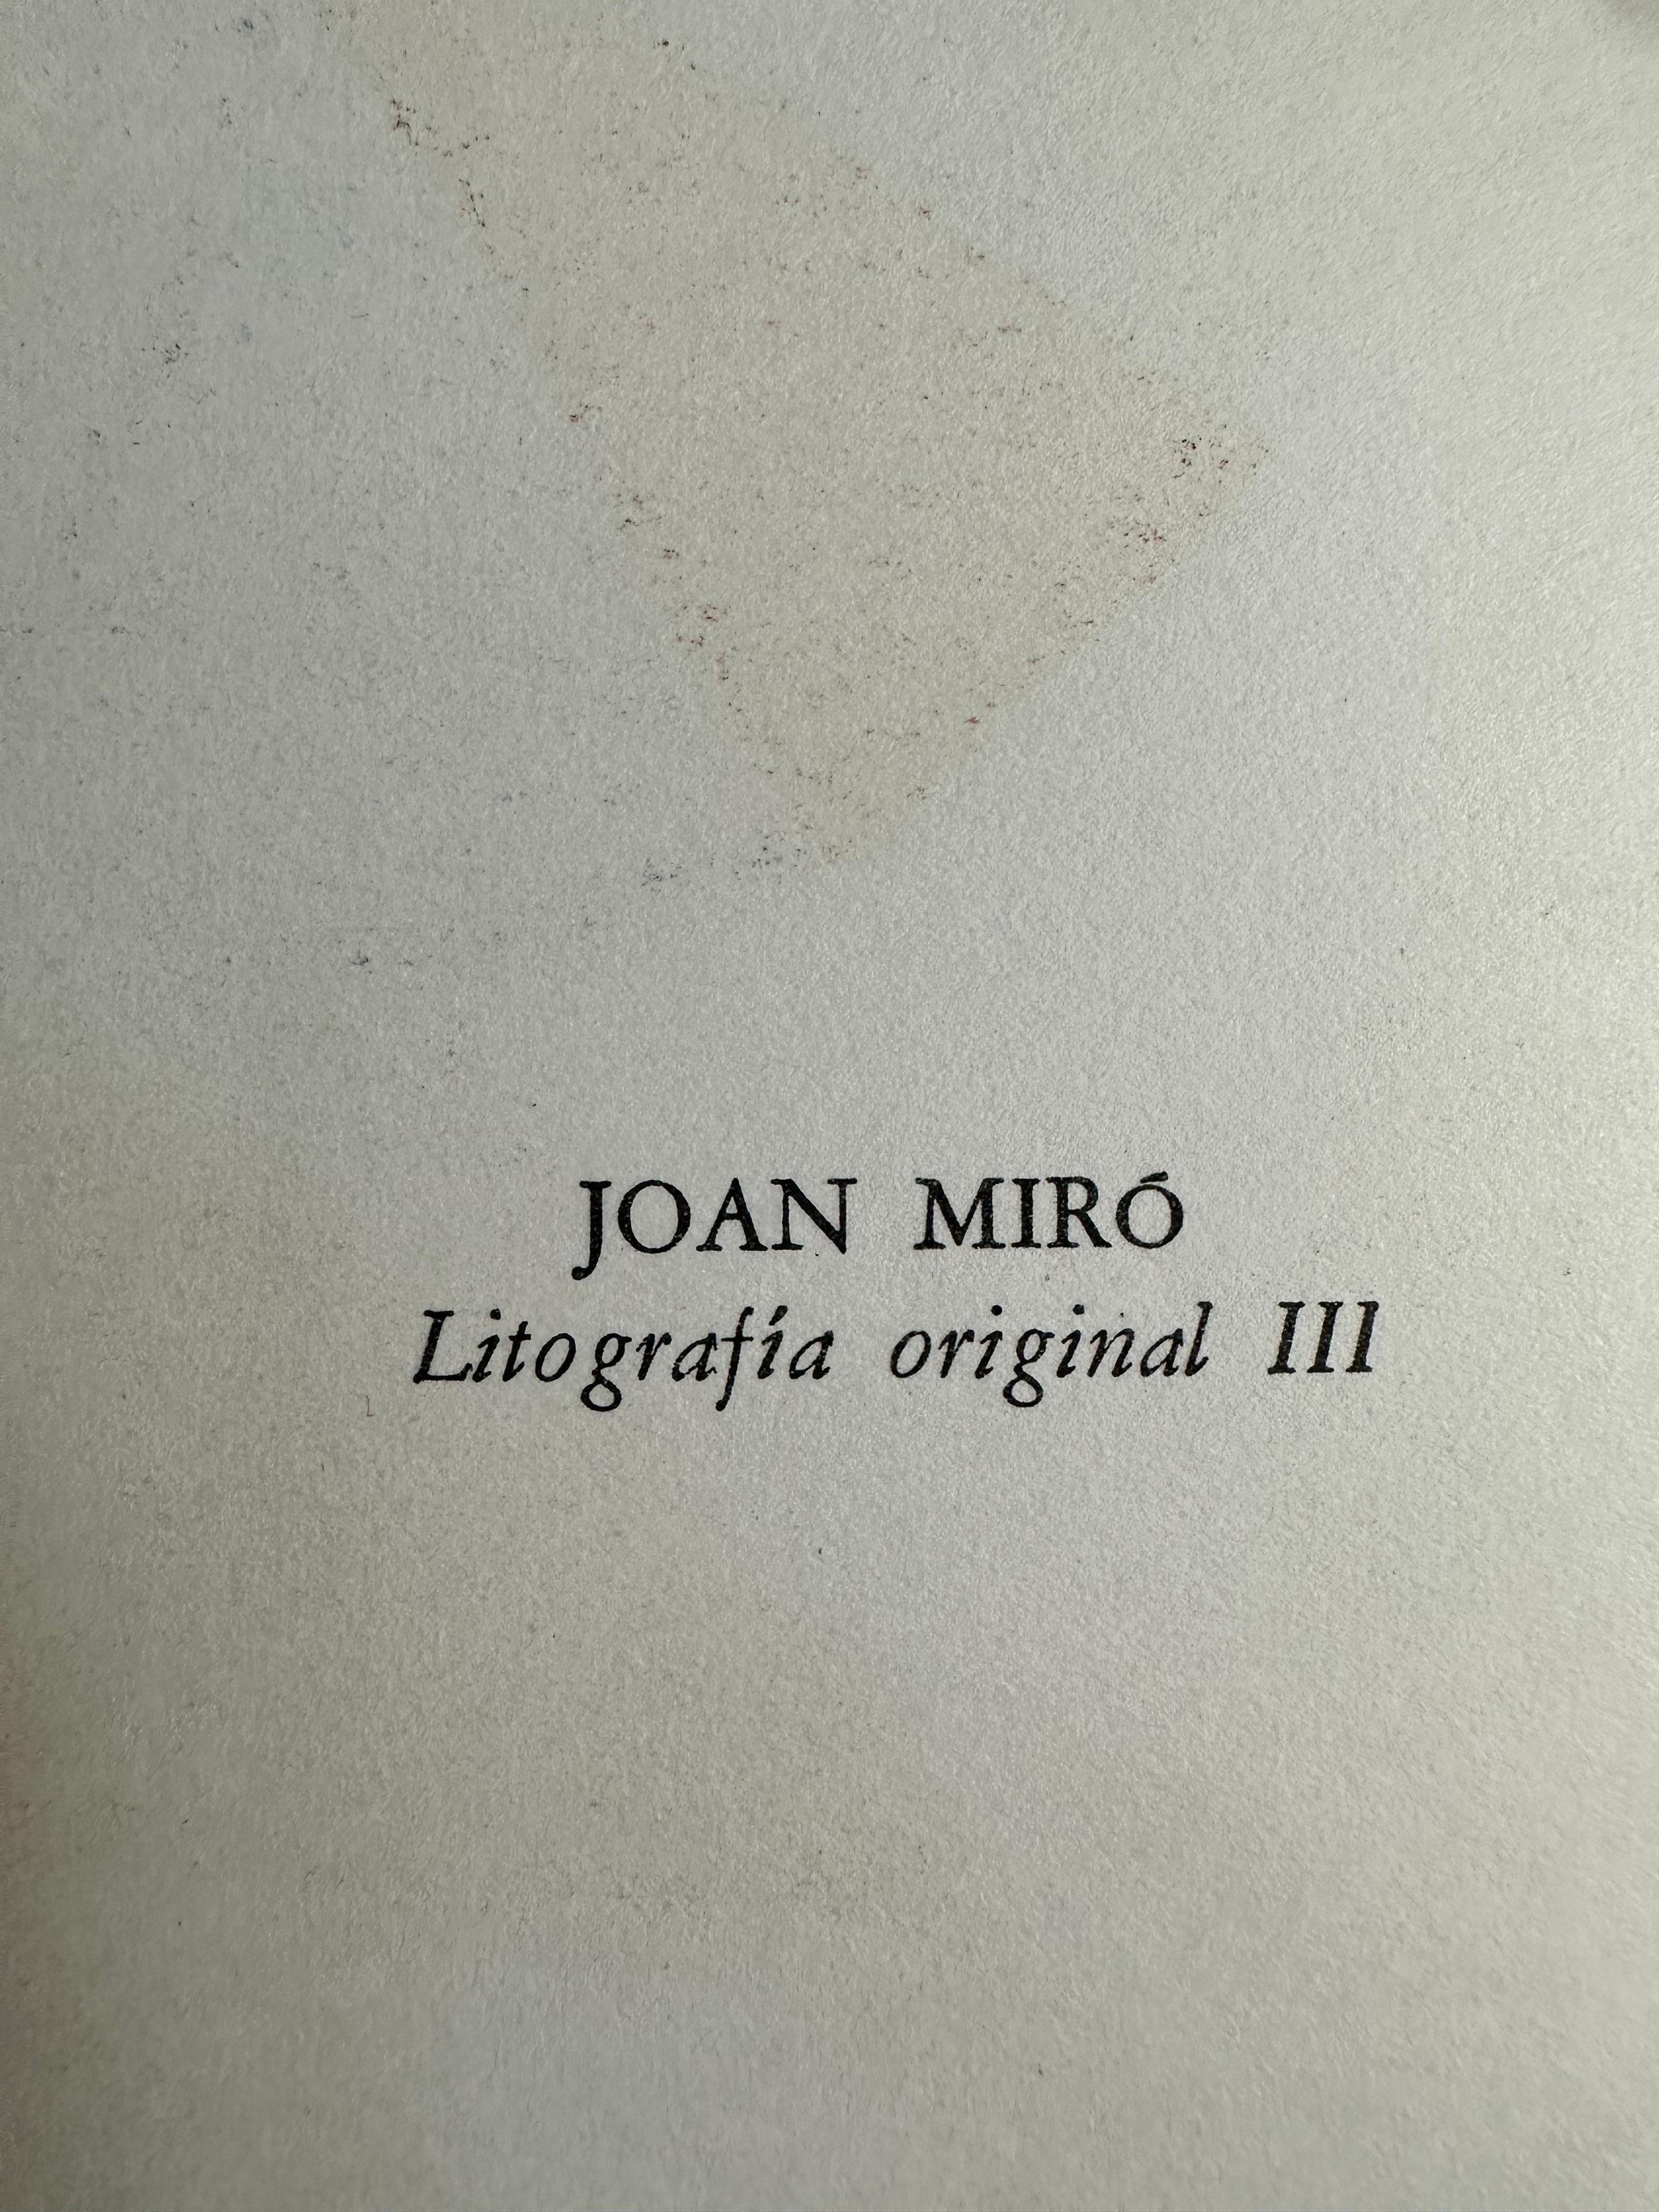 Lithographe III - Print by Joan Miró